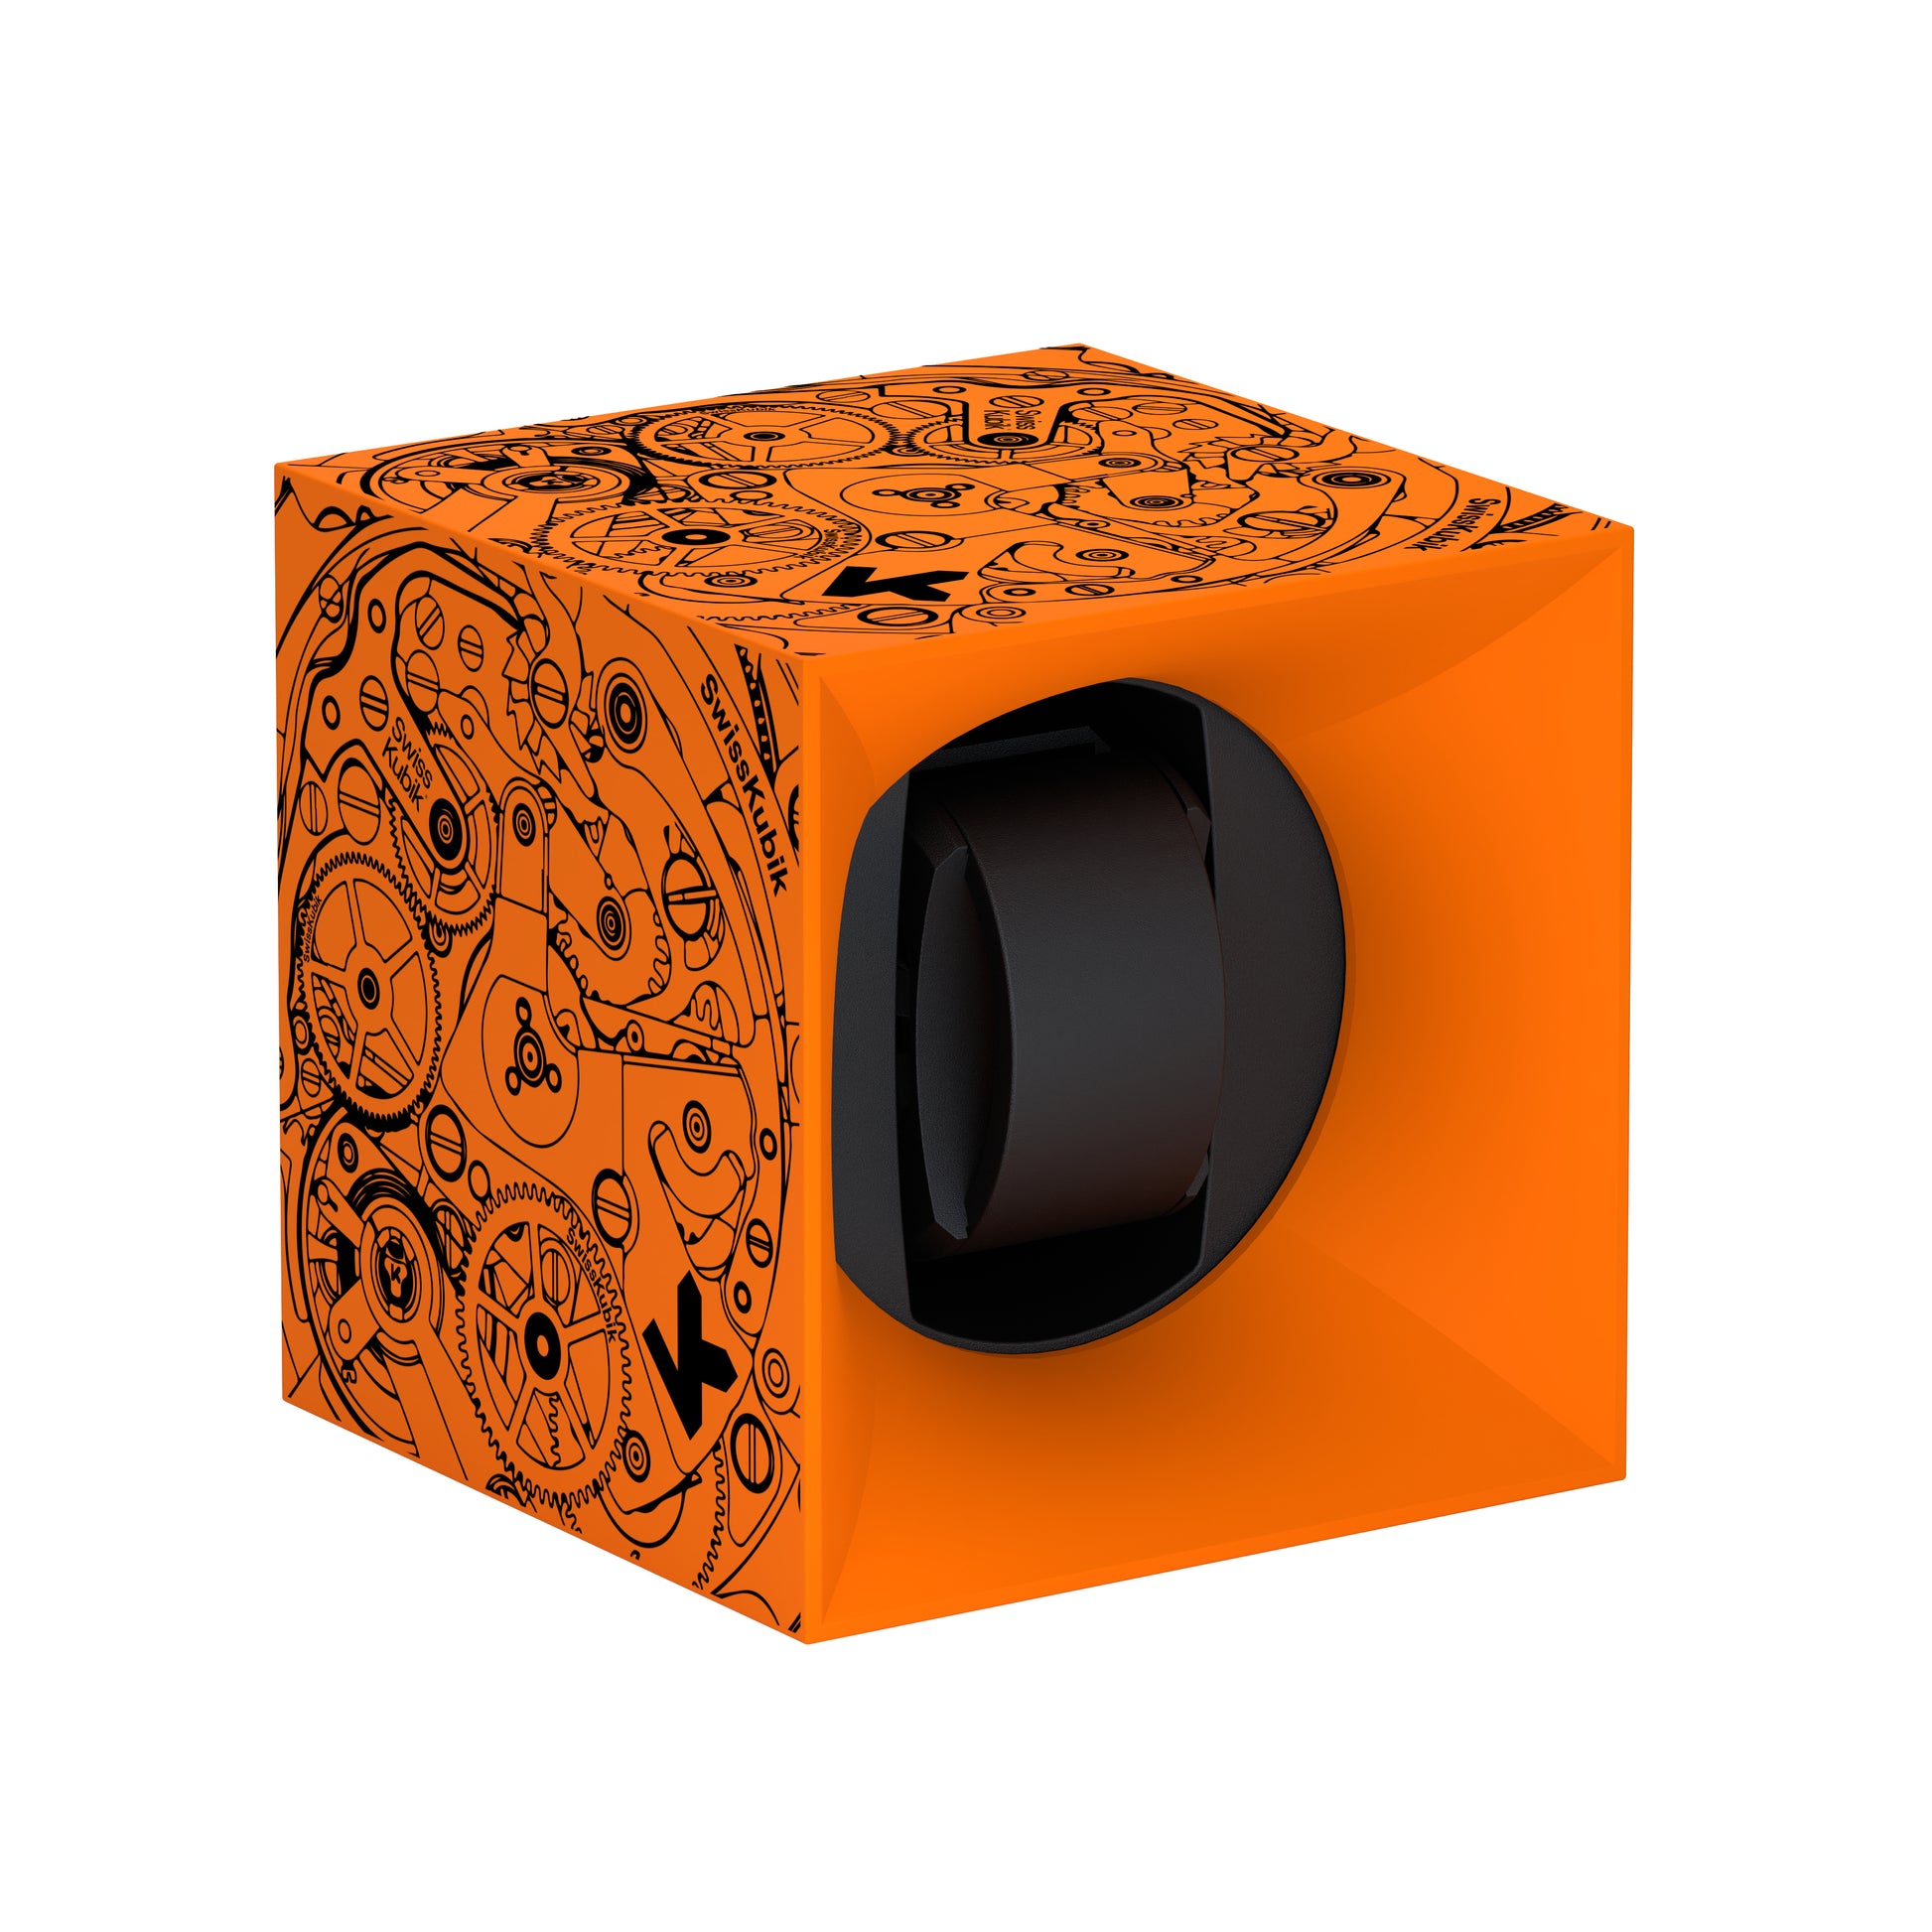 SwissKubik : remontoir montre automatique Startbox Soft Touch Orange 1 montre